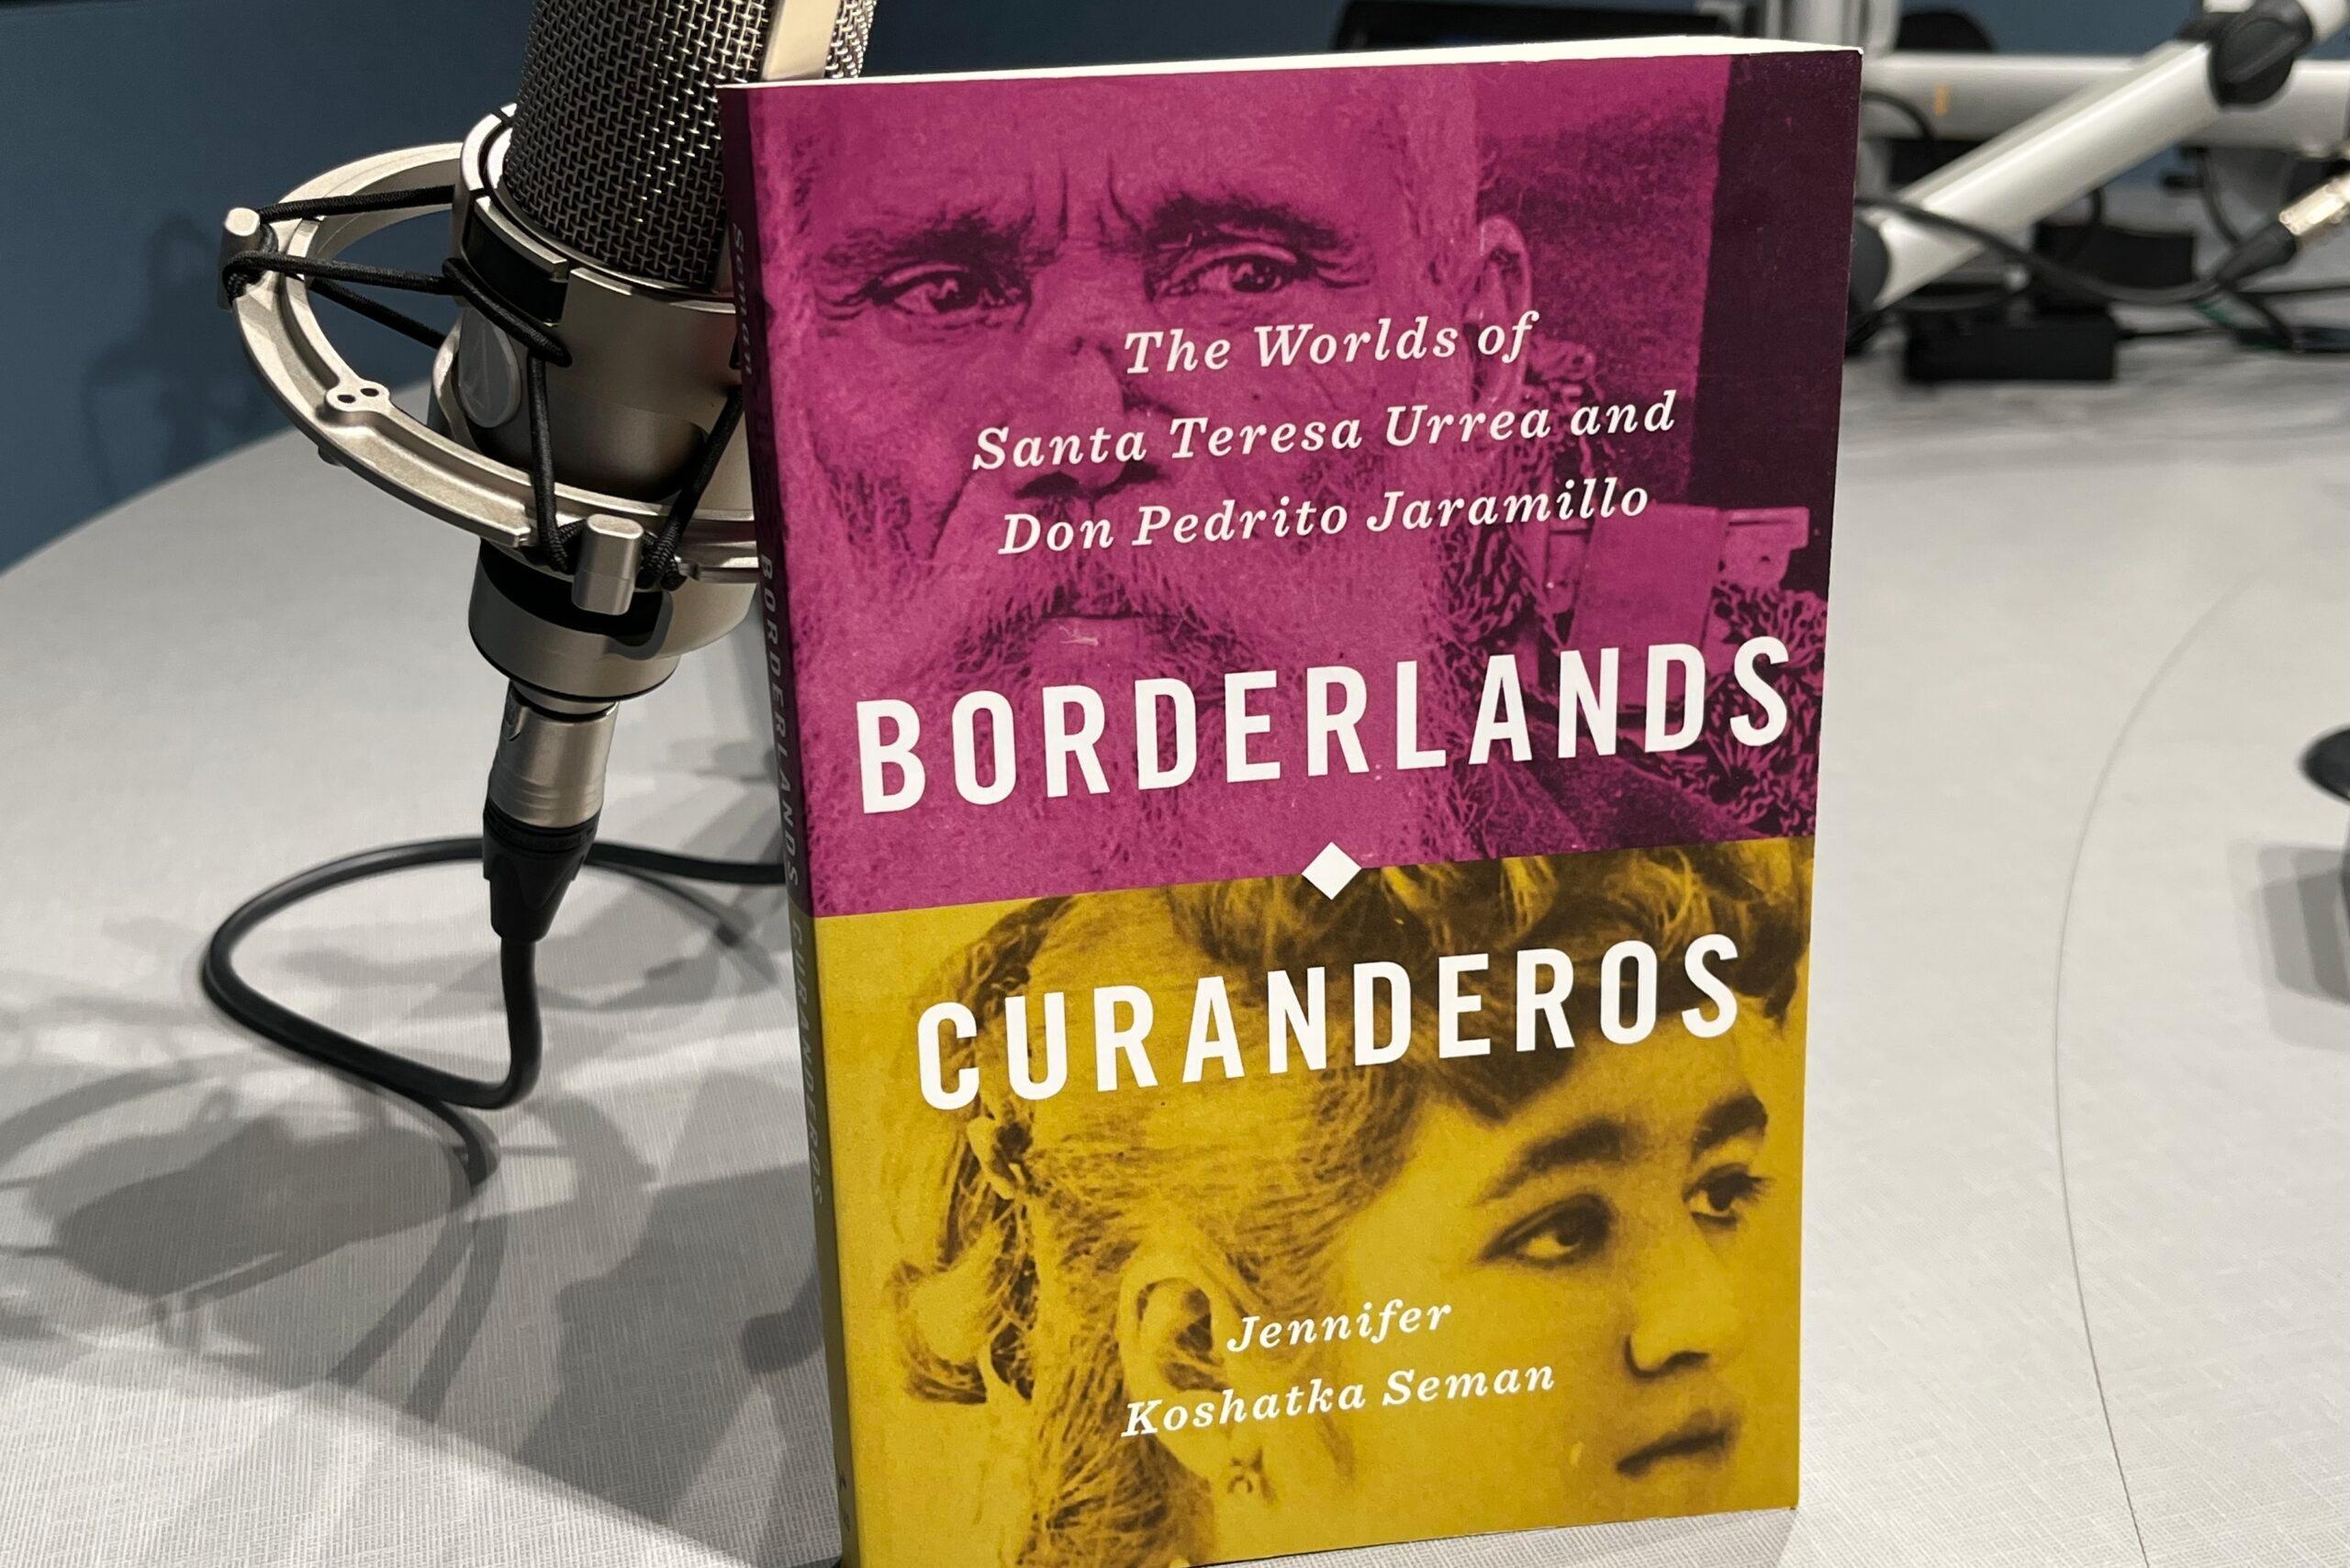 Borderlands Curanderos Historian Jennifer Koshatka Seman